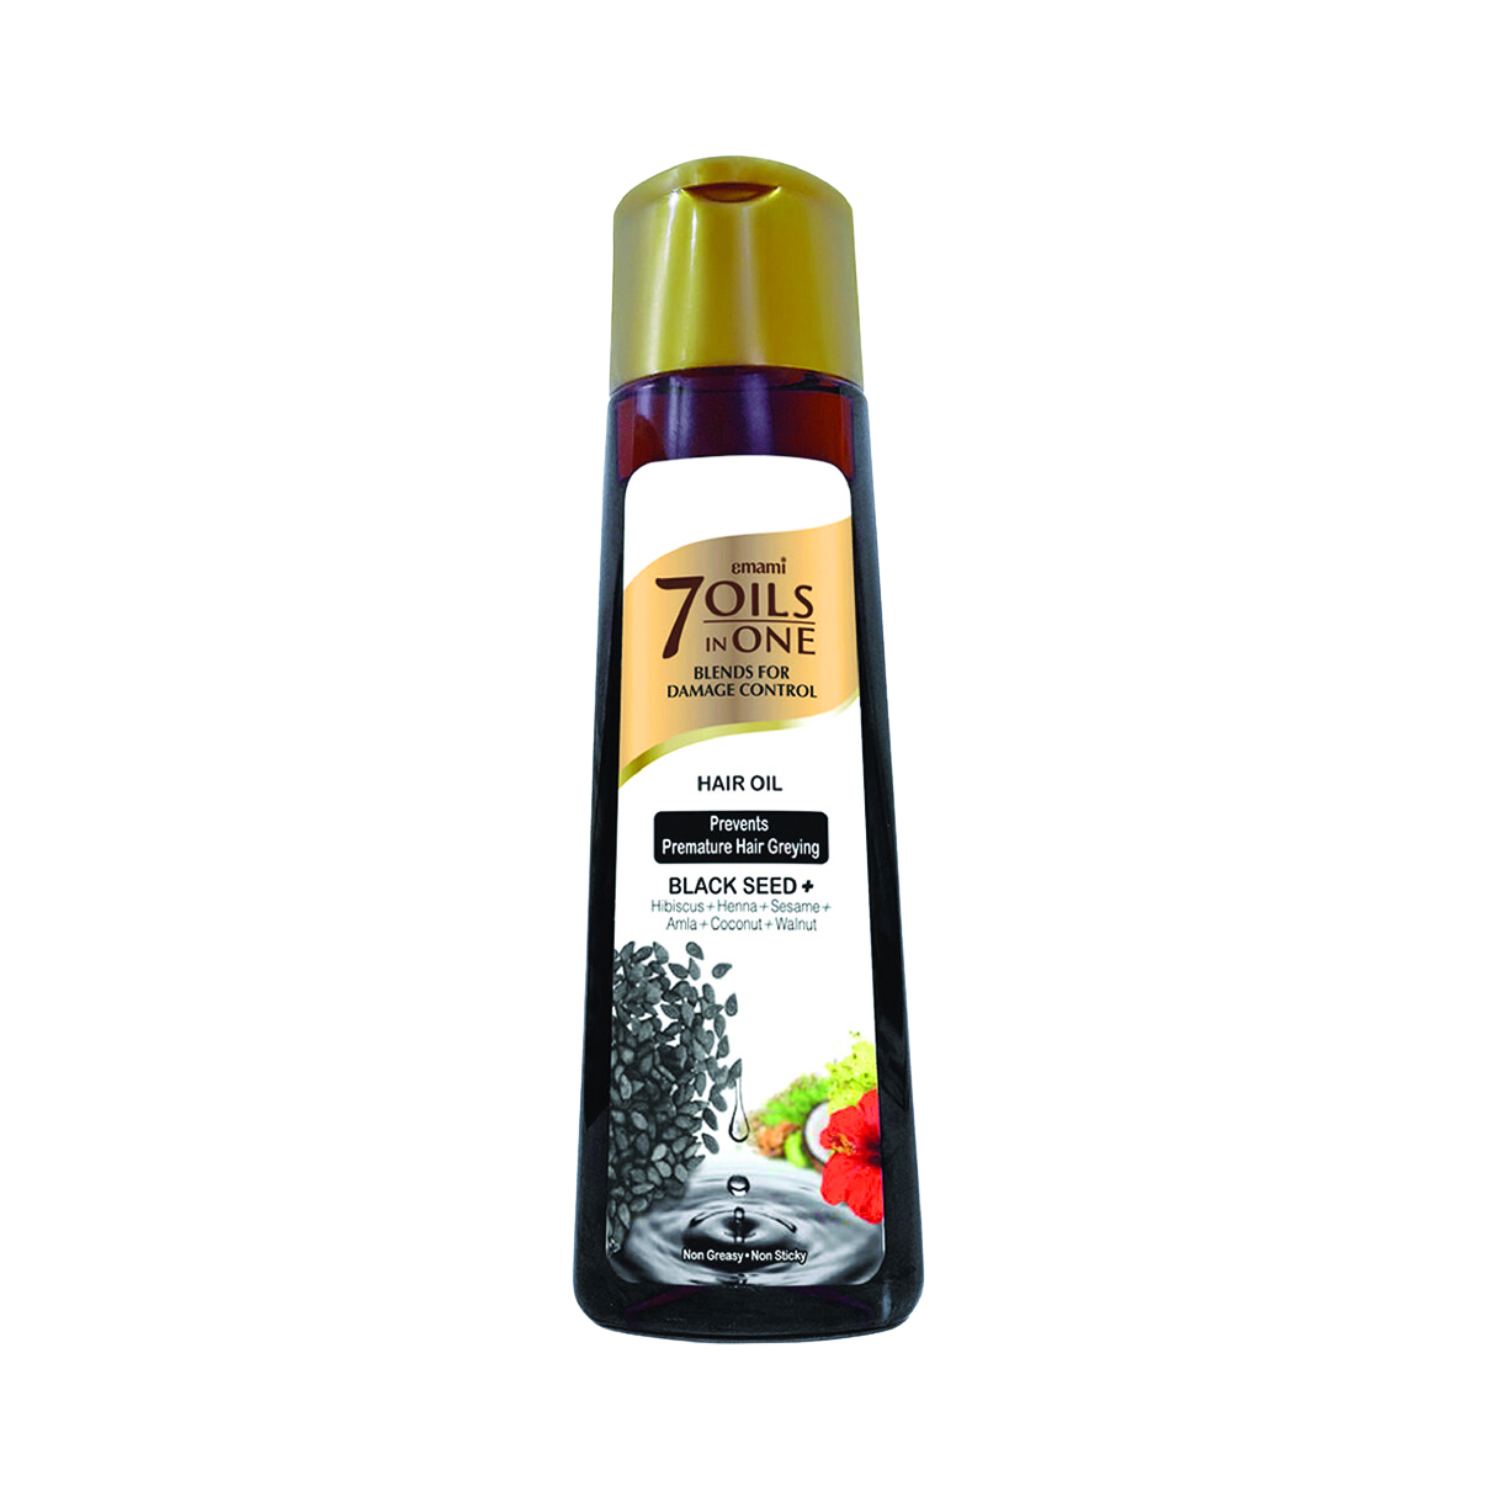 emami-7-oils-in-one-black-seed-hair-oil-200ml